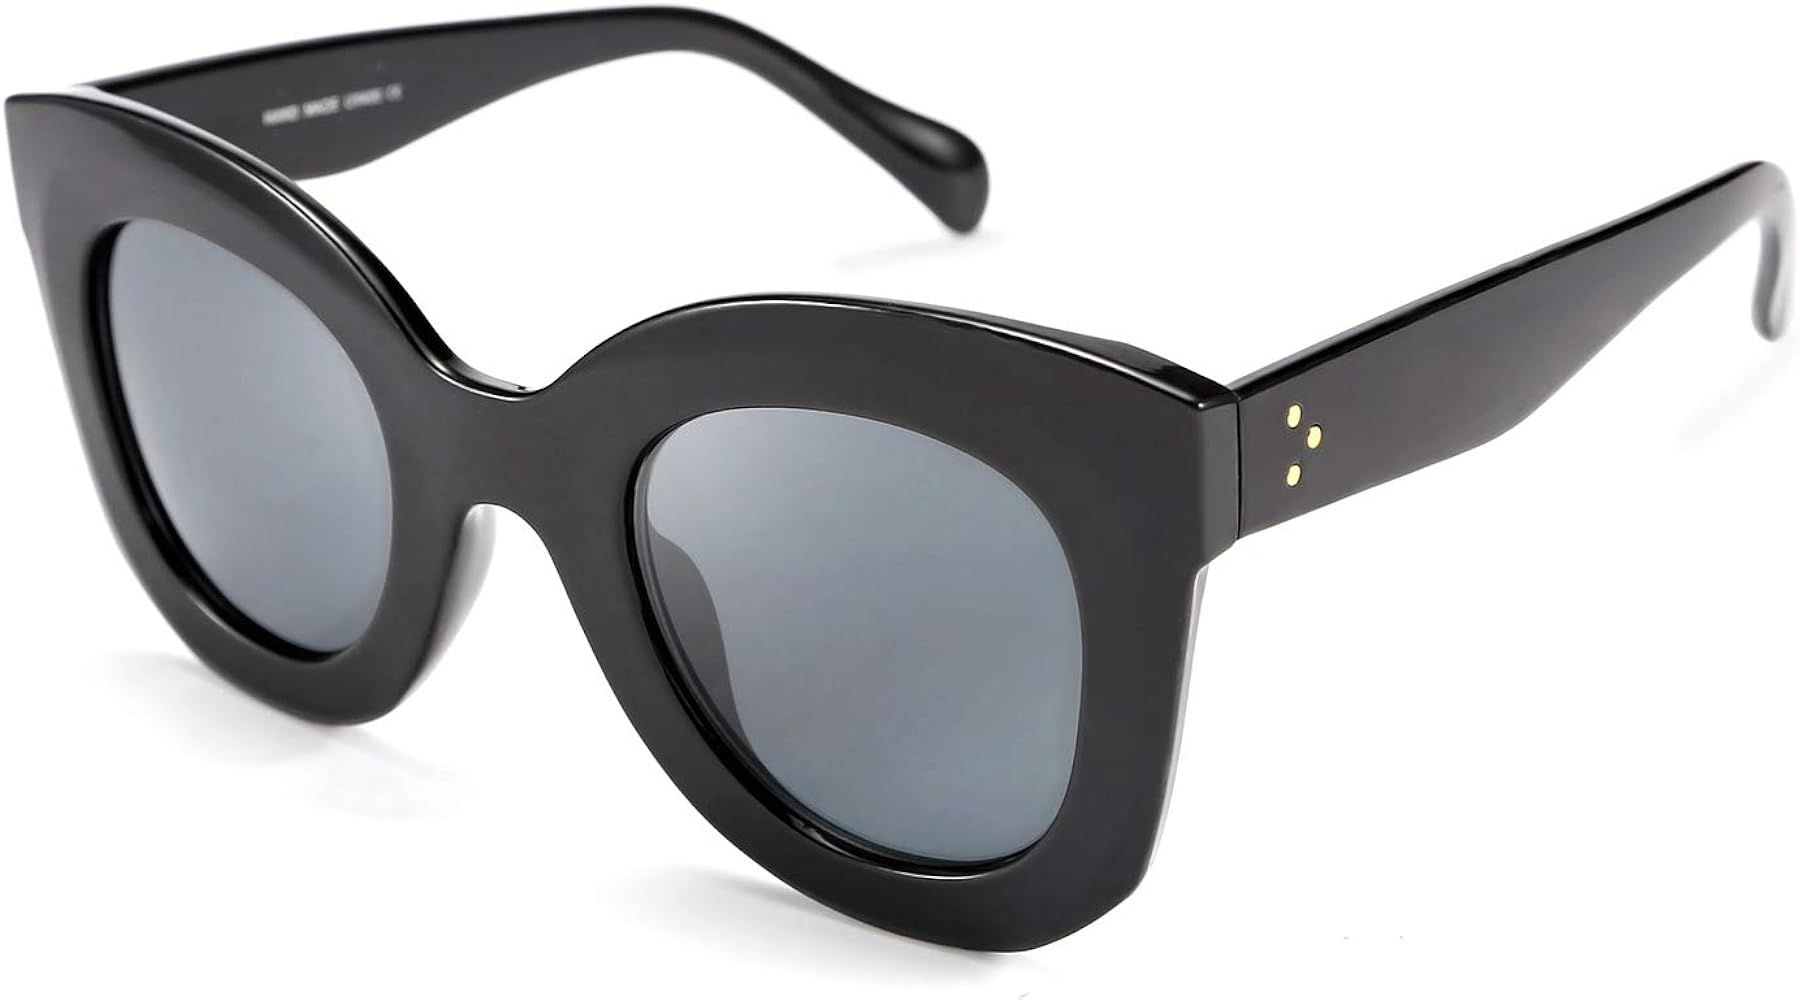 FEISEDY Oversized Square Horn Sunglasses Men Women Retro Thick Bold Frame B2572 | Amazon (US)